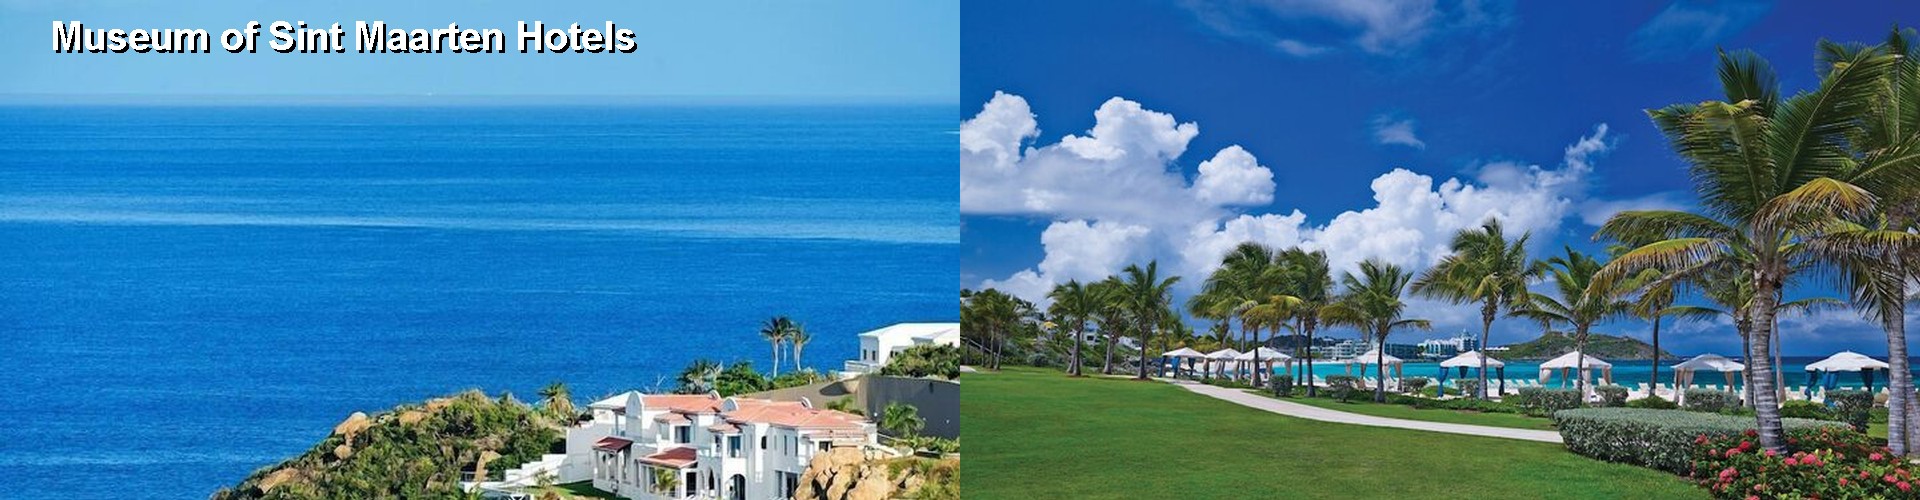 5 Best Hotels near Museum of Sint Maarten